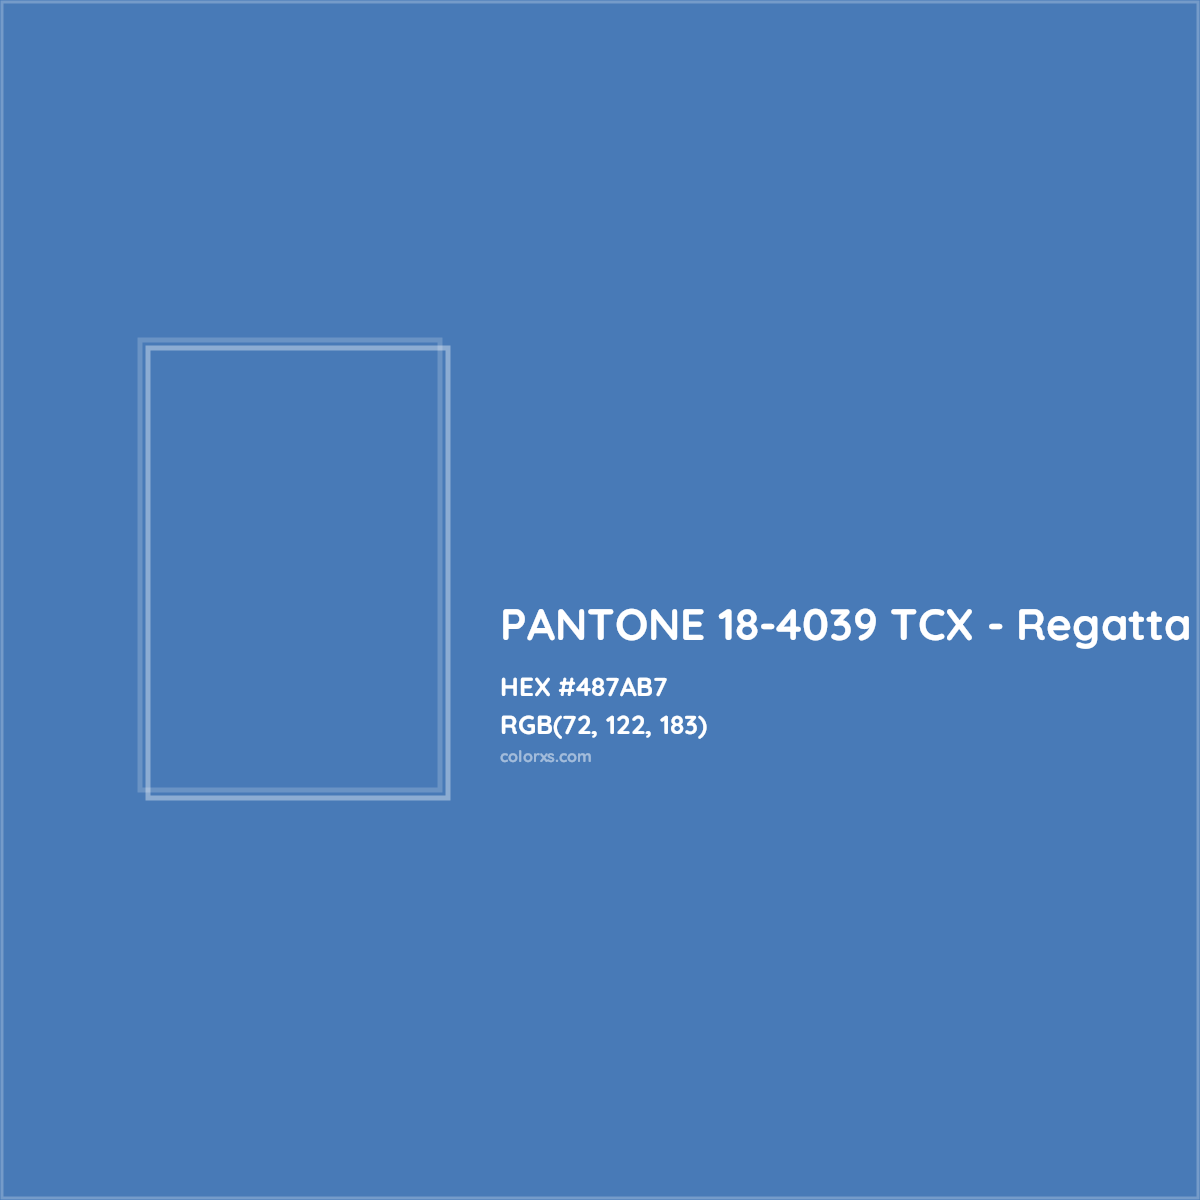 HEX #487AB7 PANTONE 18-4039 TCX - Regatta CMS Pantone TCX - Color Code